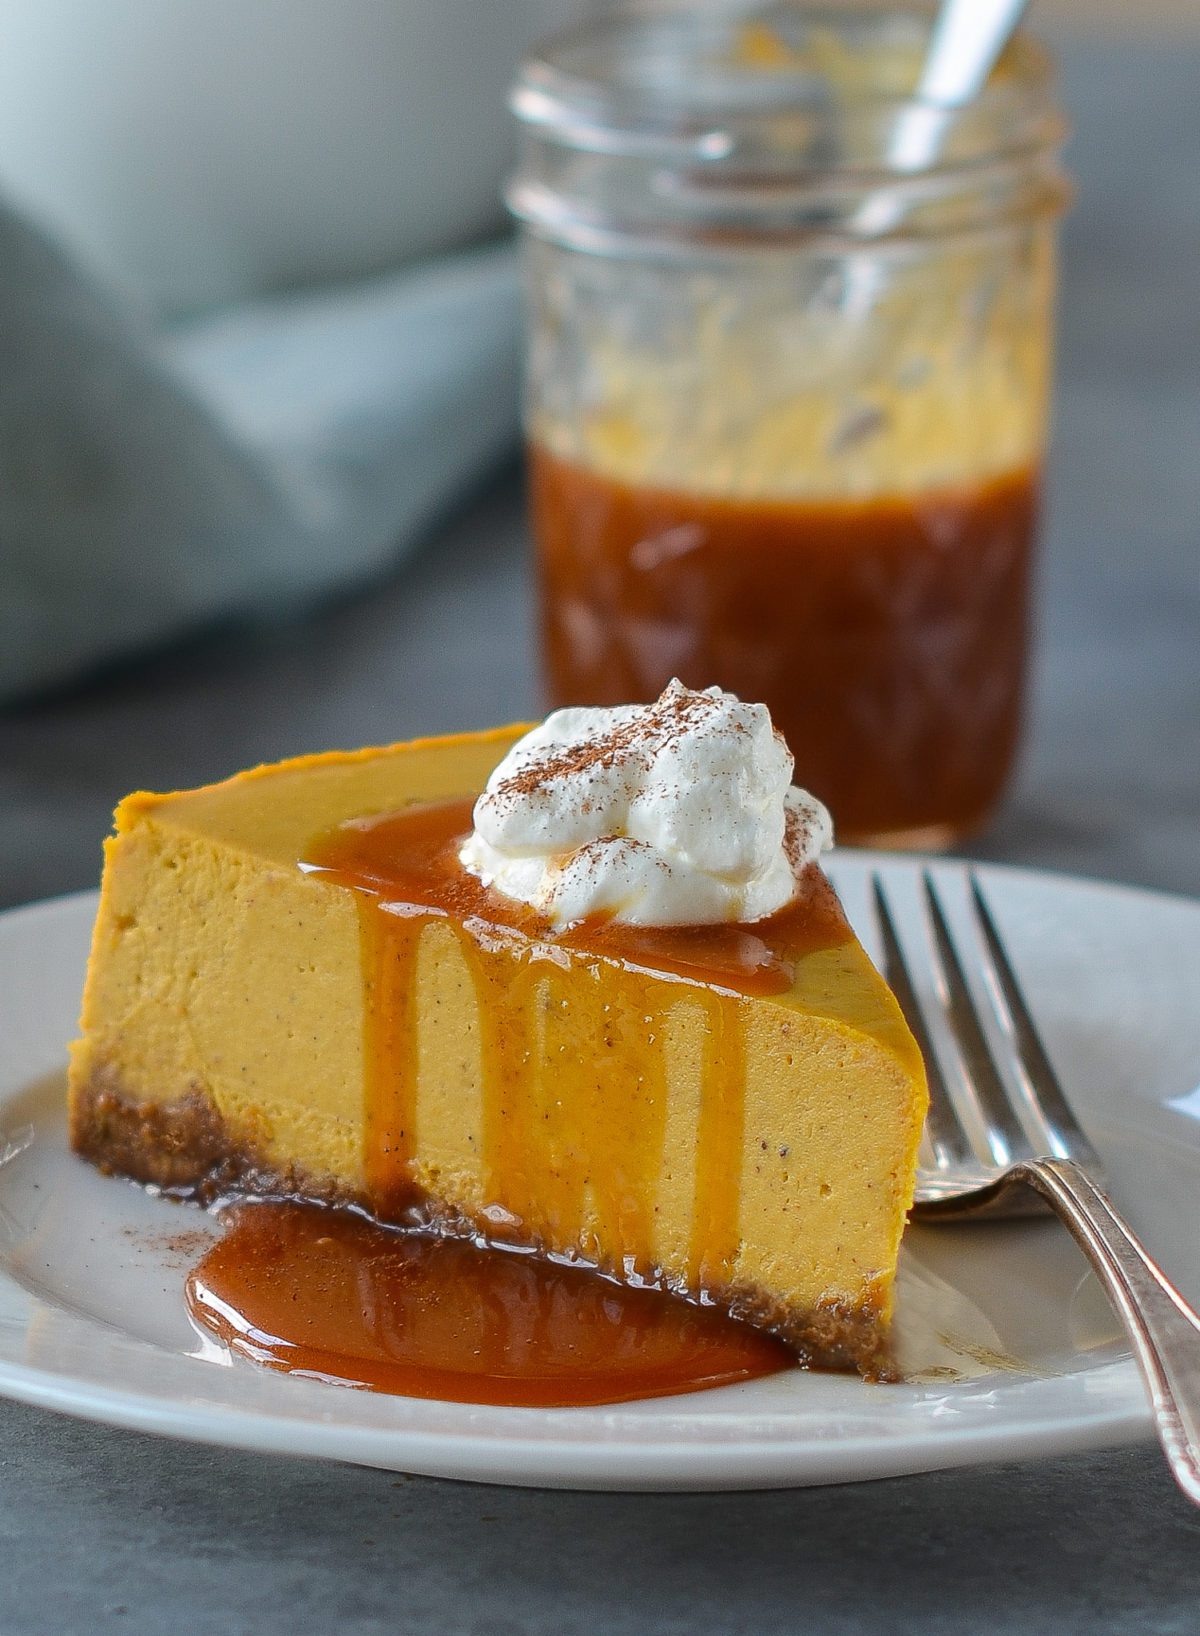 https://www.onceuponachef.com/images/2012/11/Pumpkin-Cheesecake_Gingernsap_Crust_Caramel_Sauce-2-1200x1636.jpg